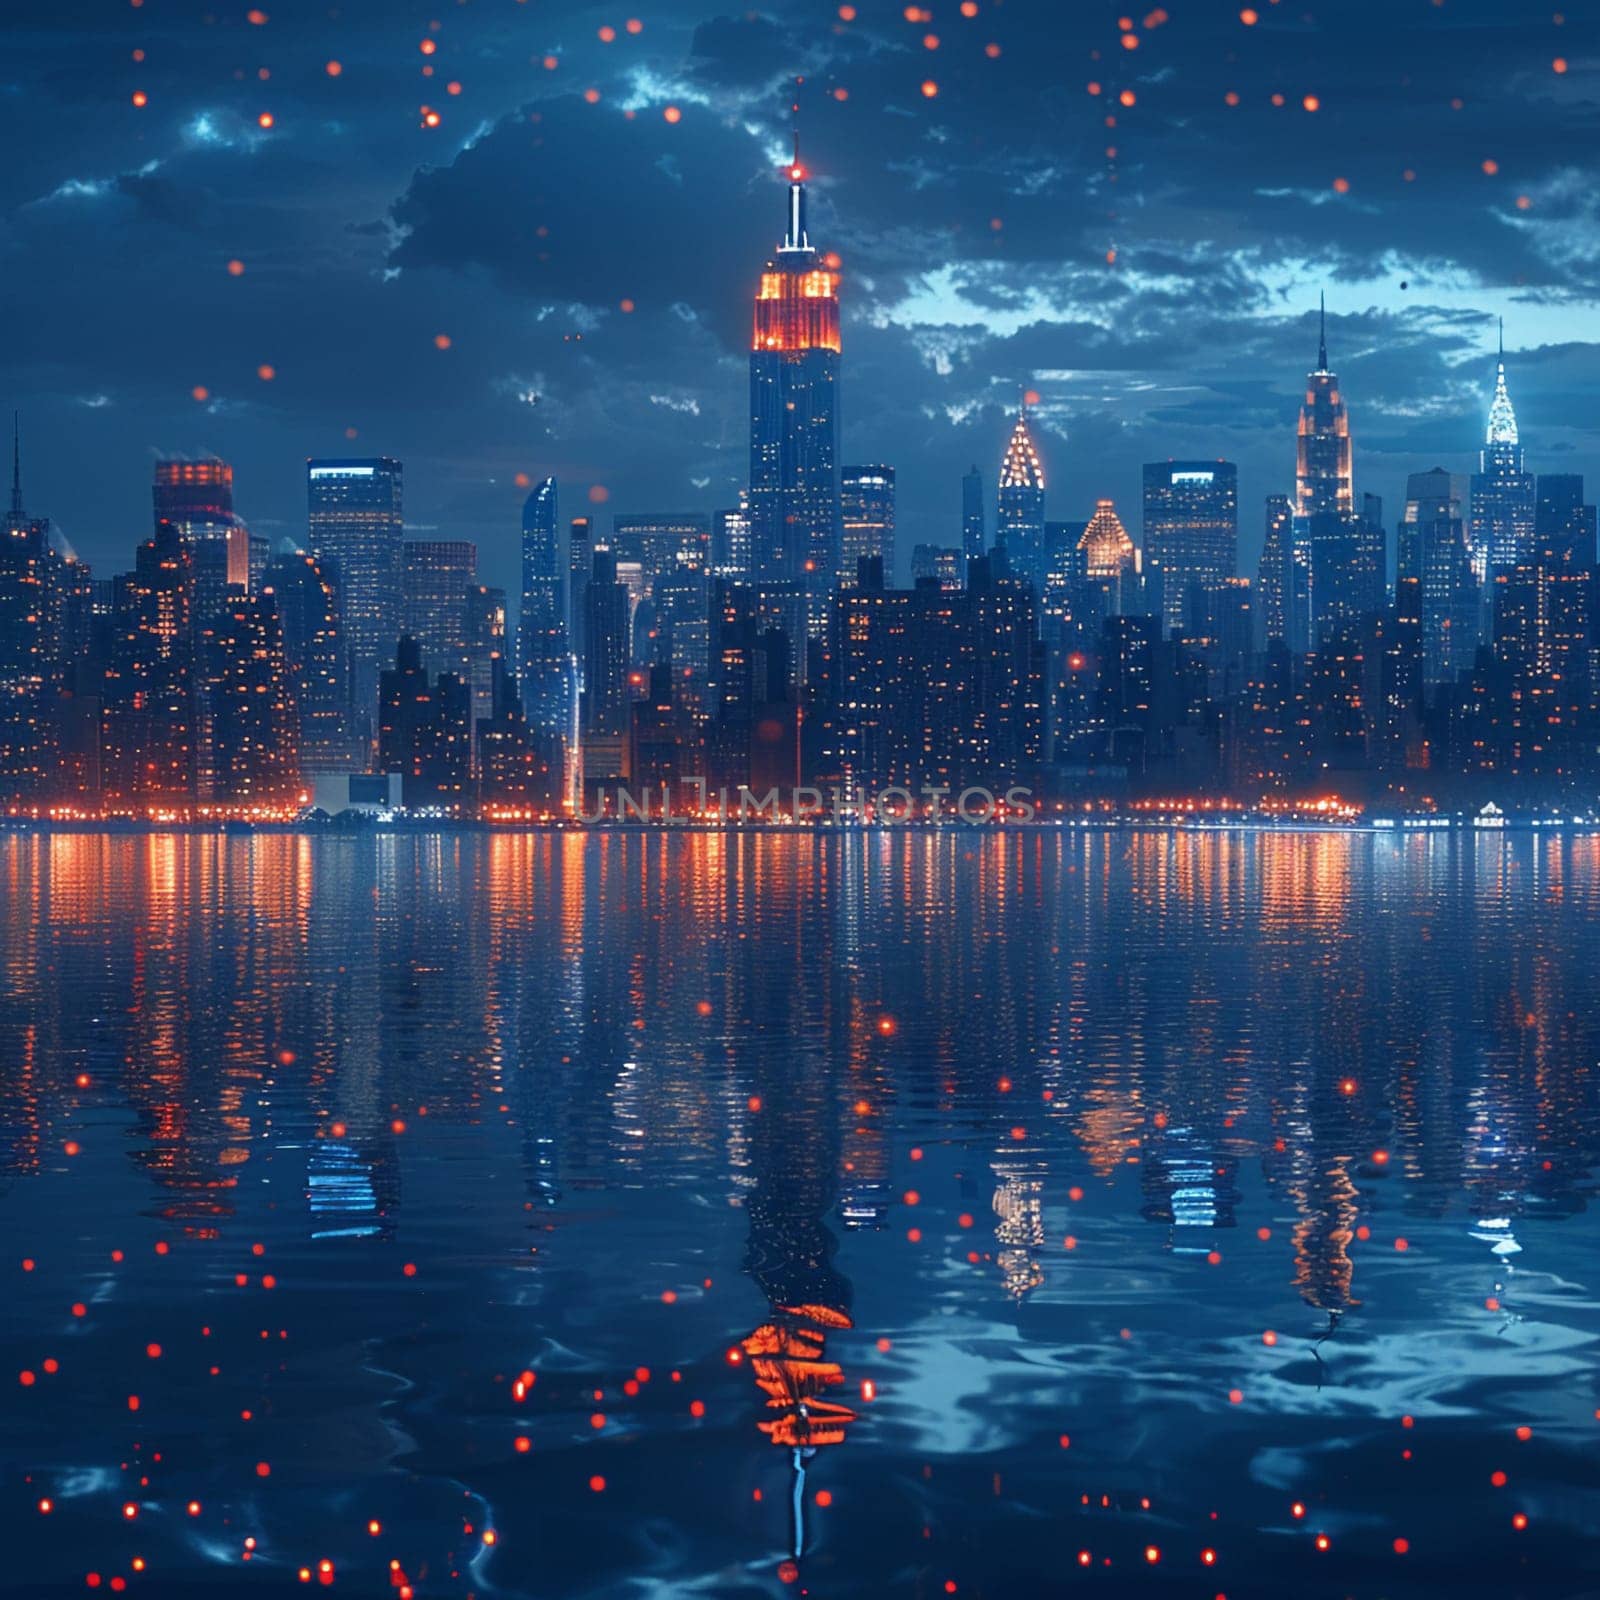 Illuminated city skyline at night by Benzoix